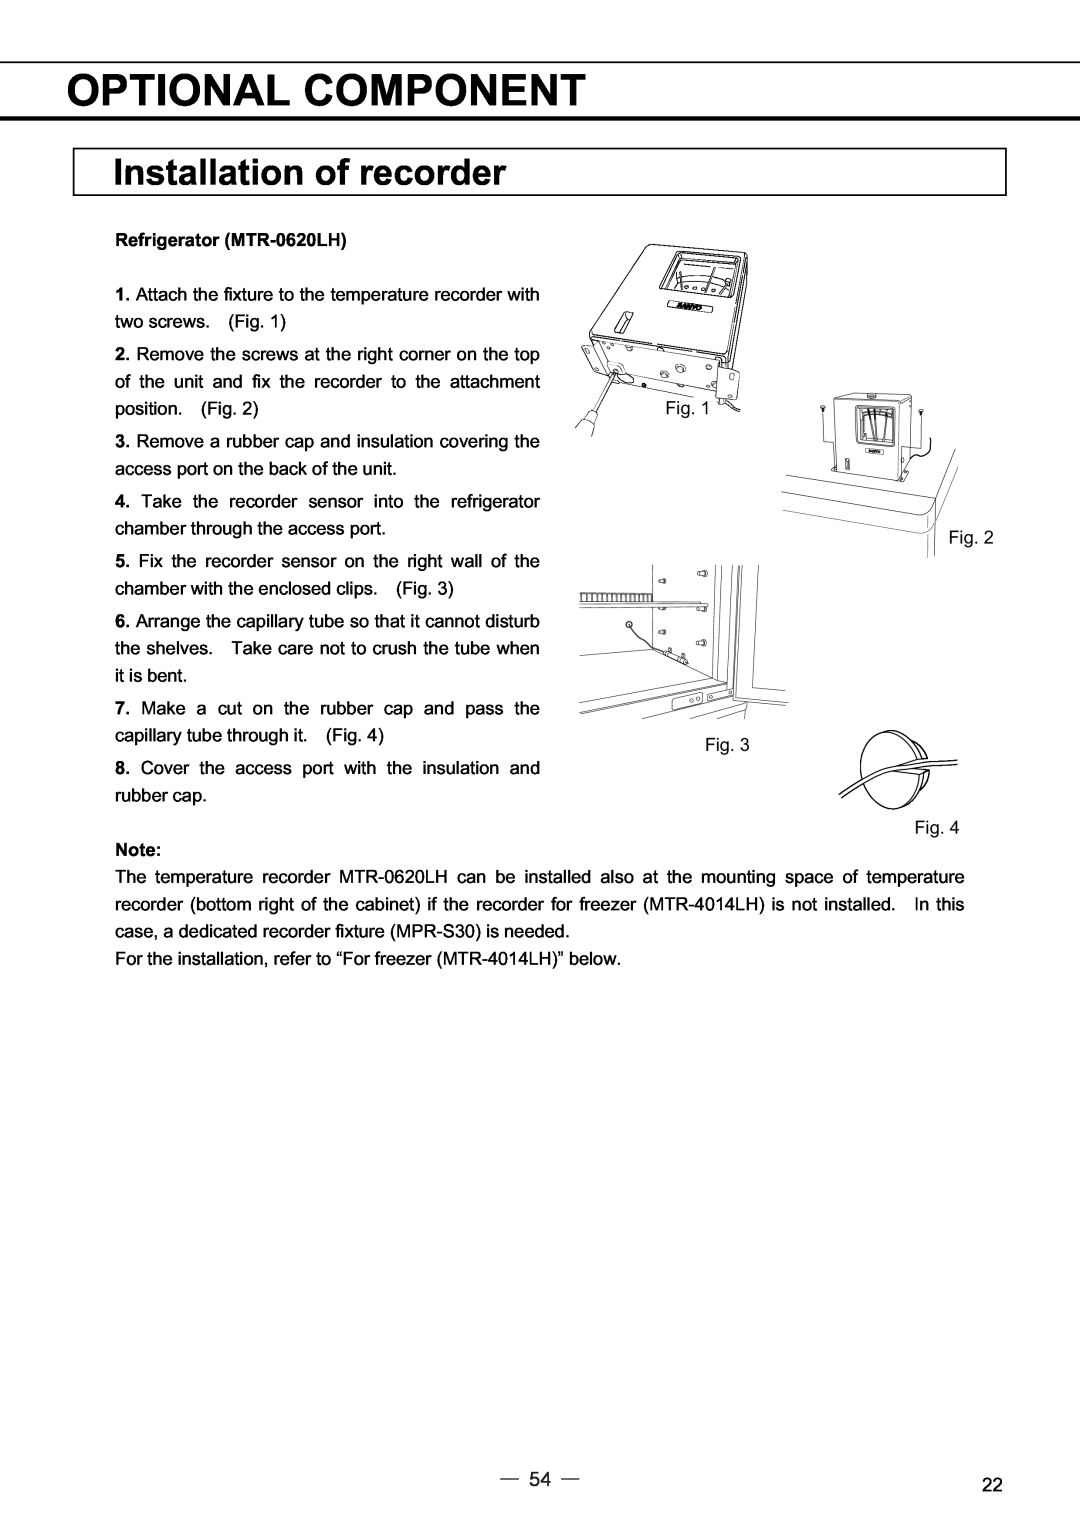 Sanyo MPR-414FS instruction manual Installation of recorder, Optional Component, Refrigerator MTR-0620LH 